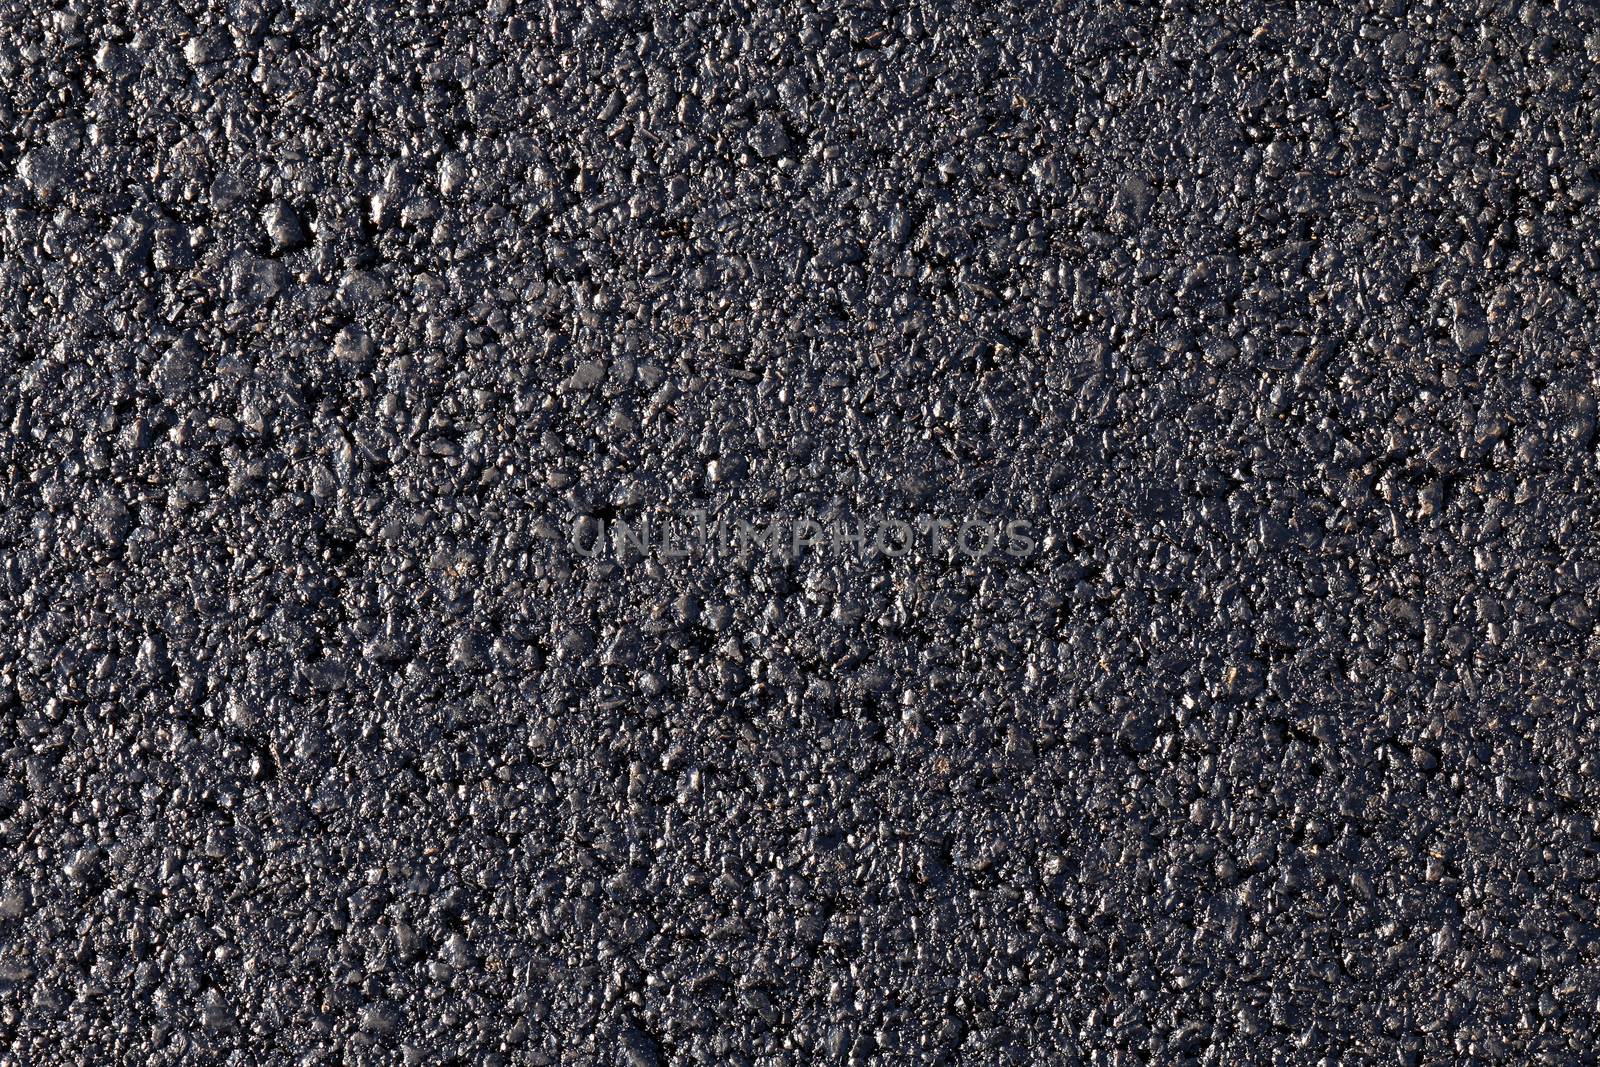 asphalt, texture asphalt at the road under construction, asphalt background, asphalt on concrete texture by cgdeaw